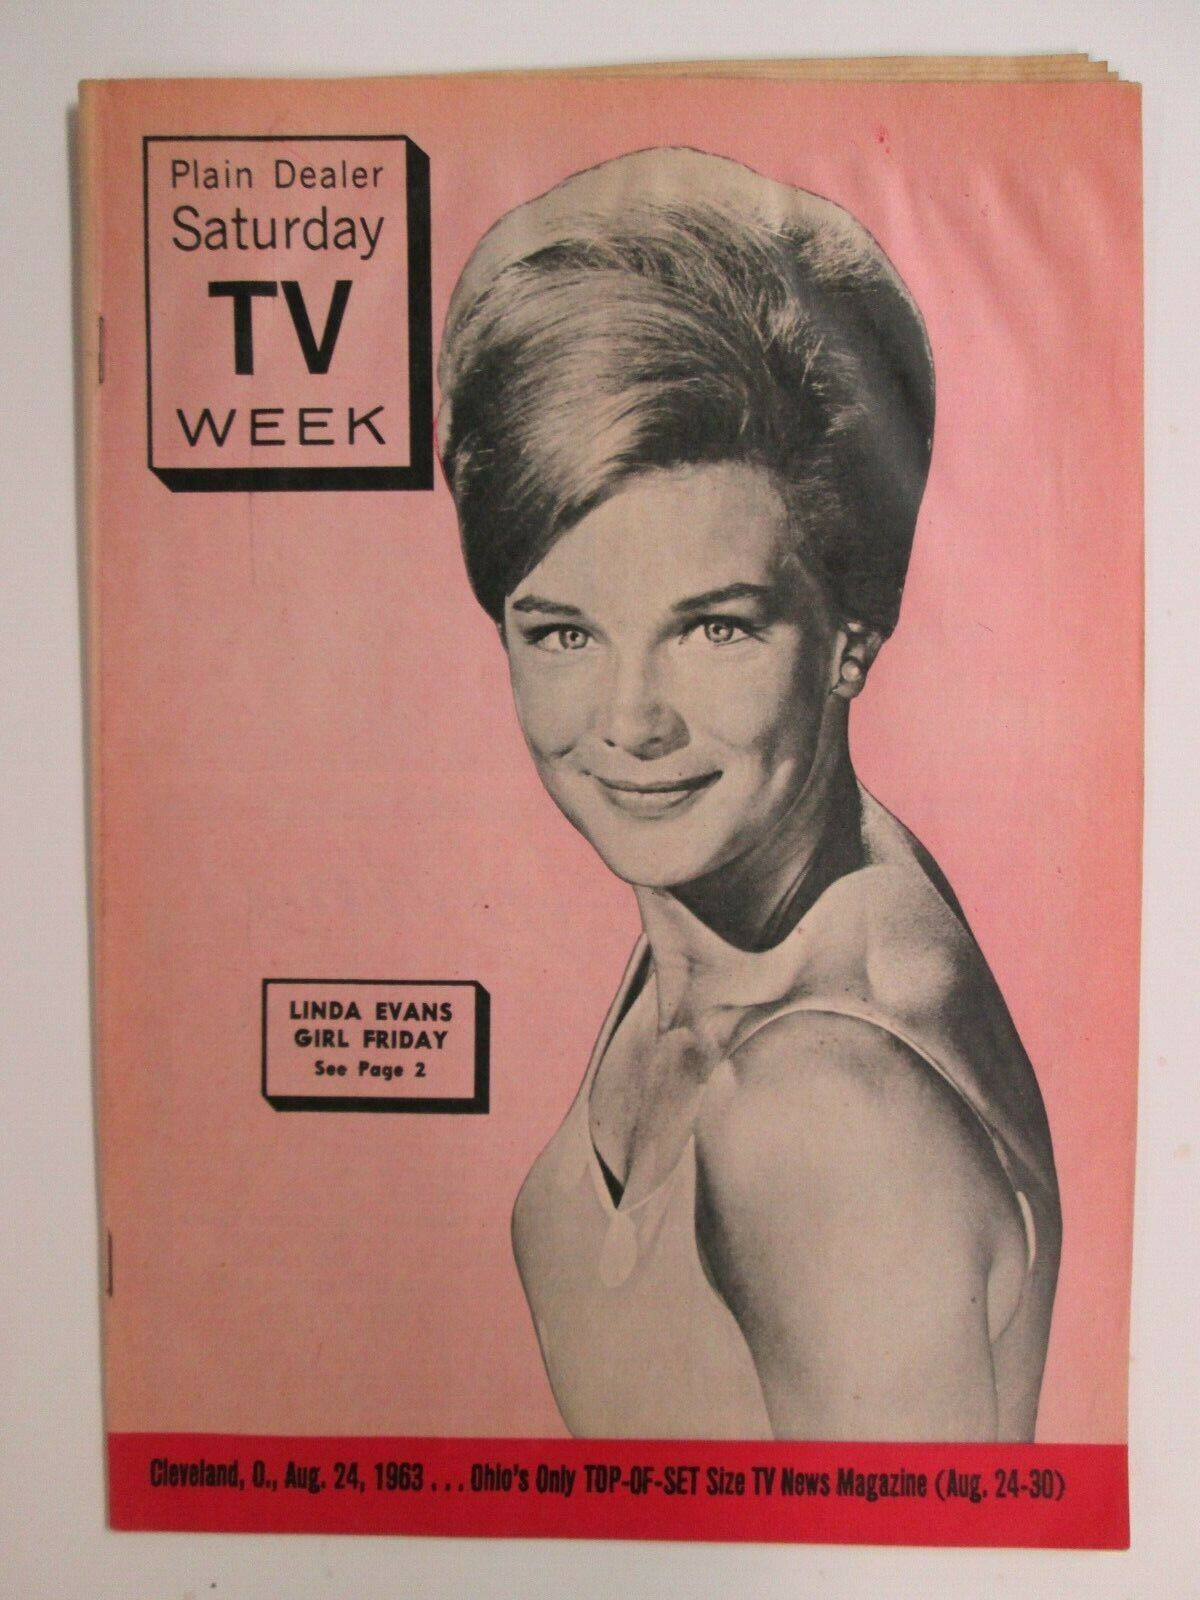 August 24, 1963, Plain Dealer Saturday Tv Week, Linda Evans, Girl Friday Cover